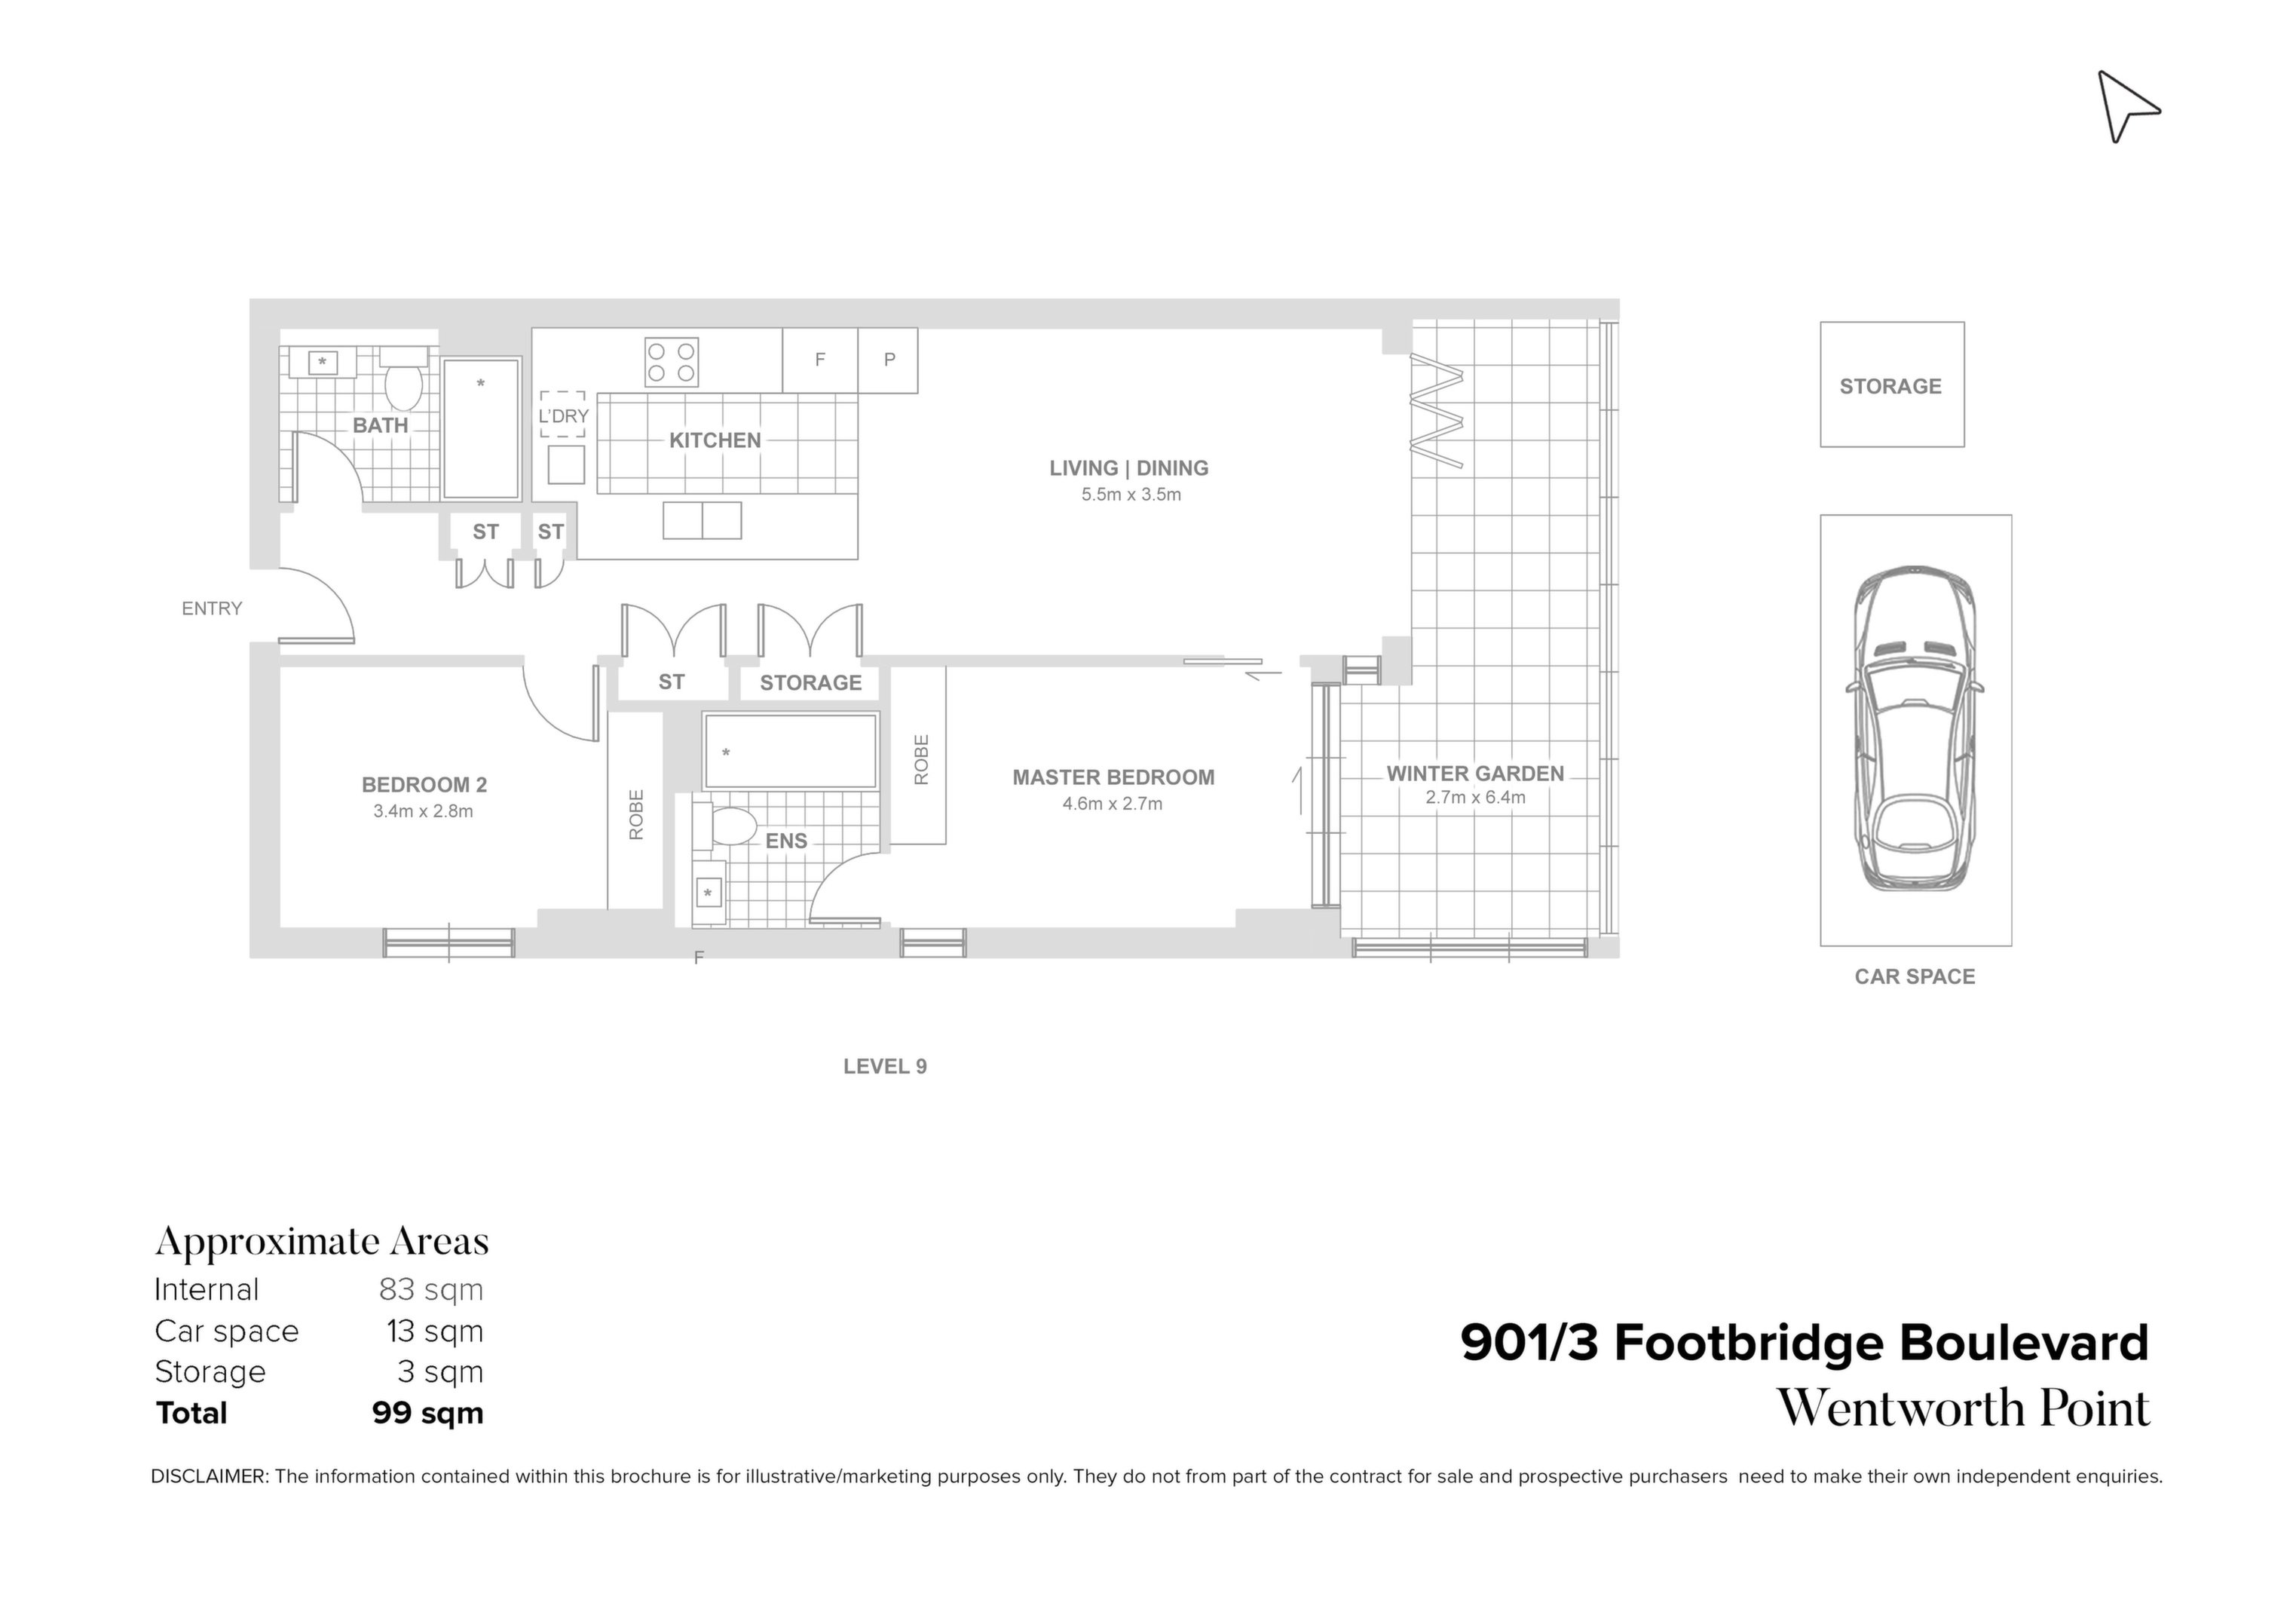 901/3 Footbridge Boulevard, Wentworth Point Sold by Chidiac Realty - floorplan